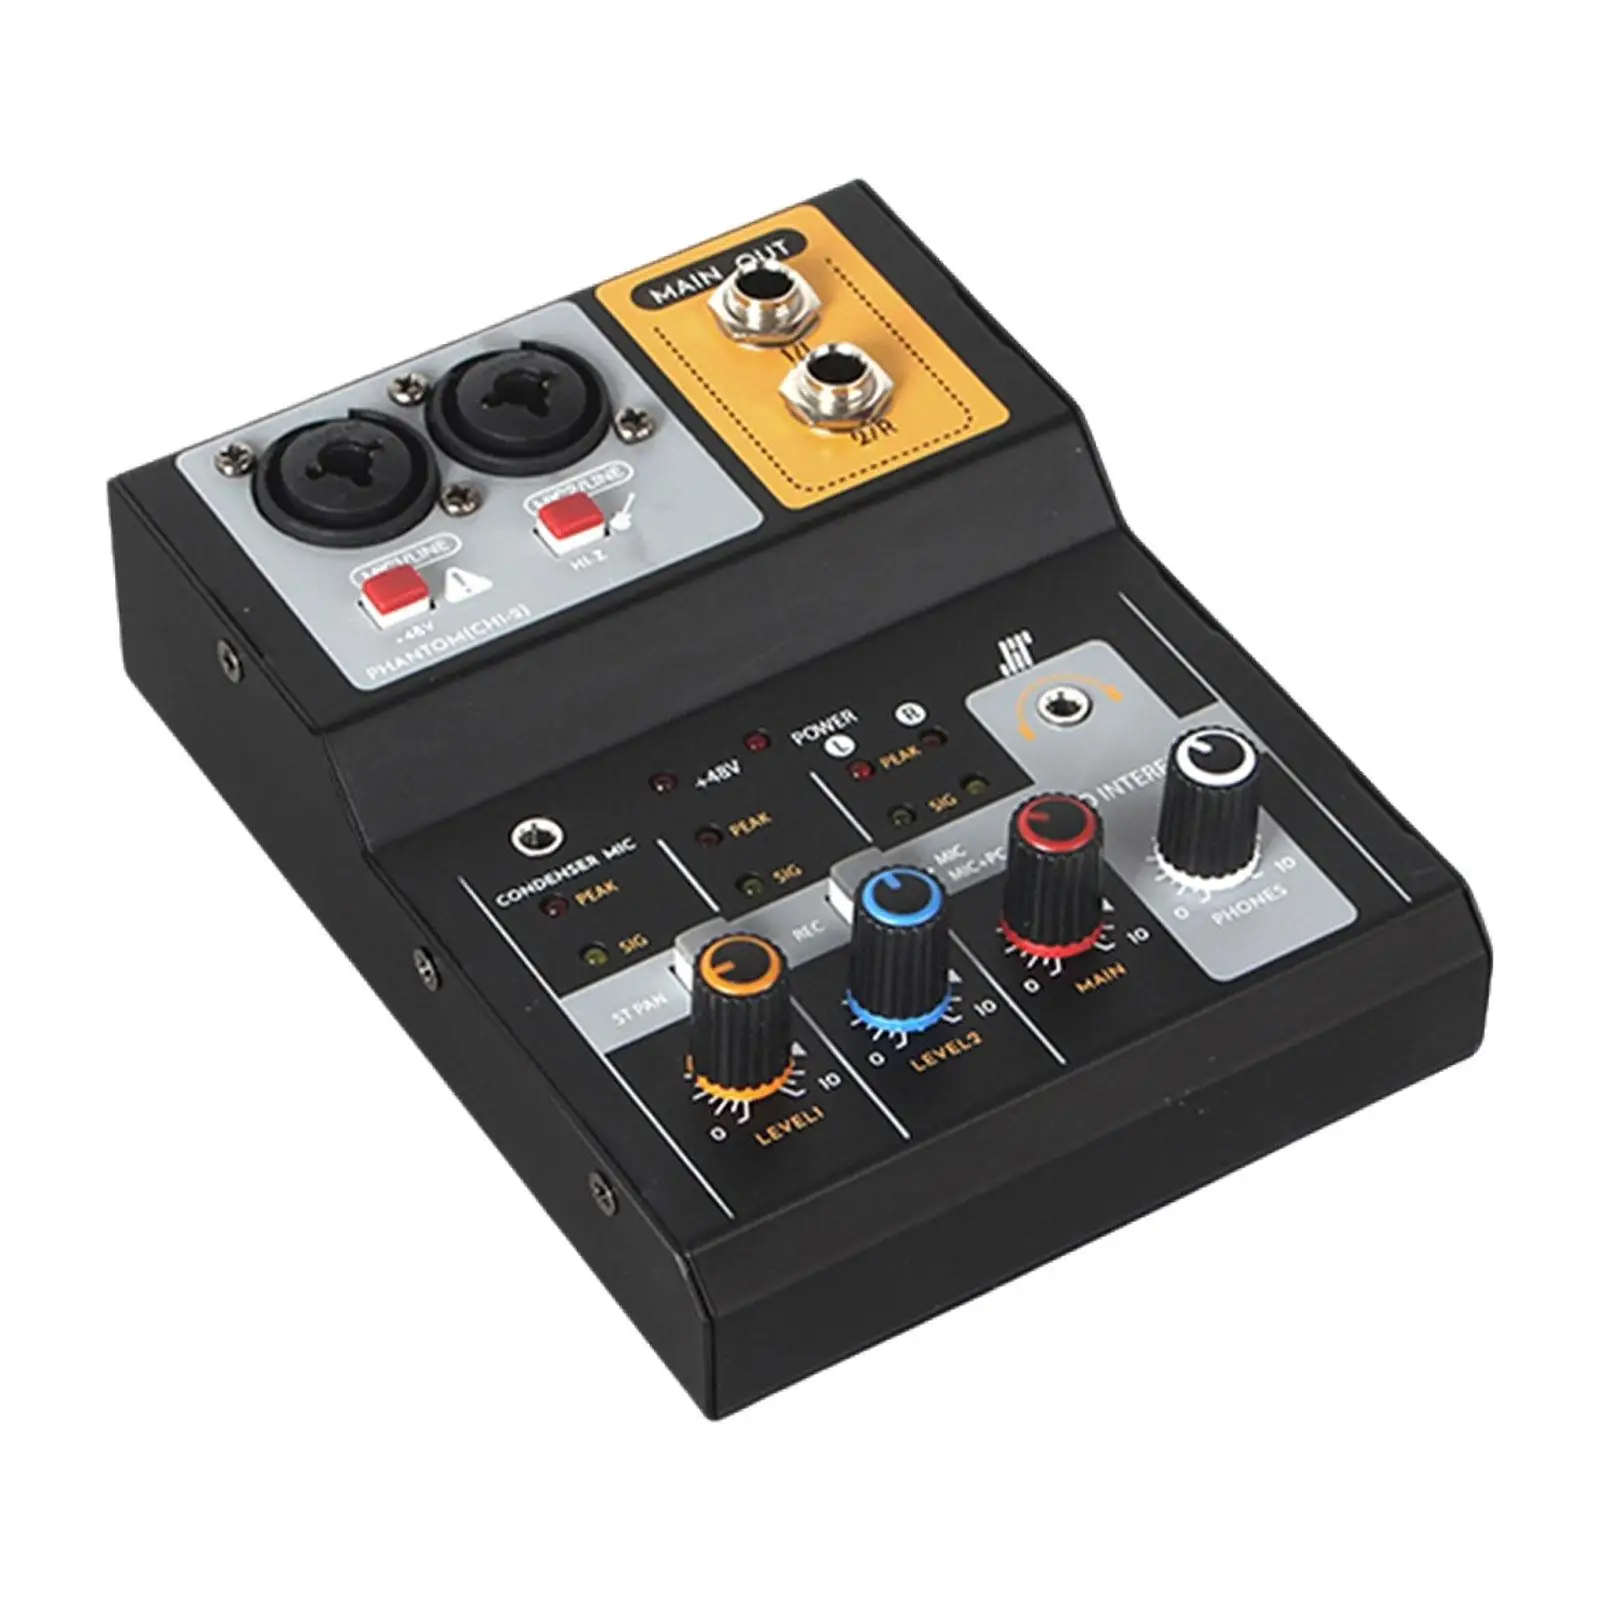 Audio Mixer Controller Easy Connection Compact Audio Amplifier Audio Mixer for KTV Studio Show Stereo Recording Podcasting Live